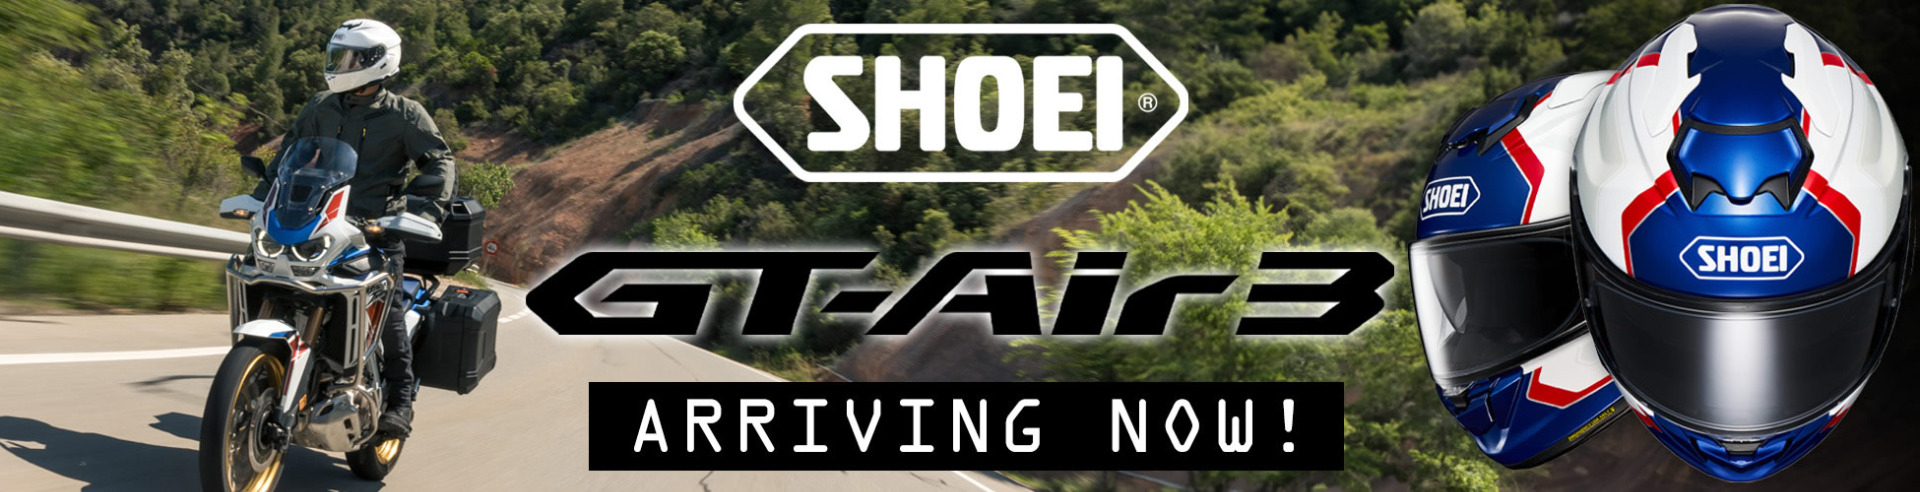 Shoei GT-Air 3 Arriving Now